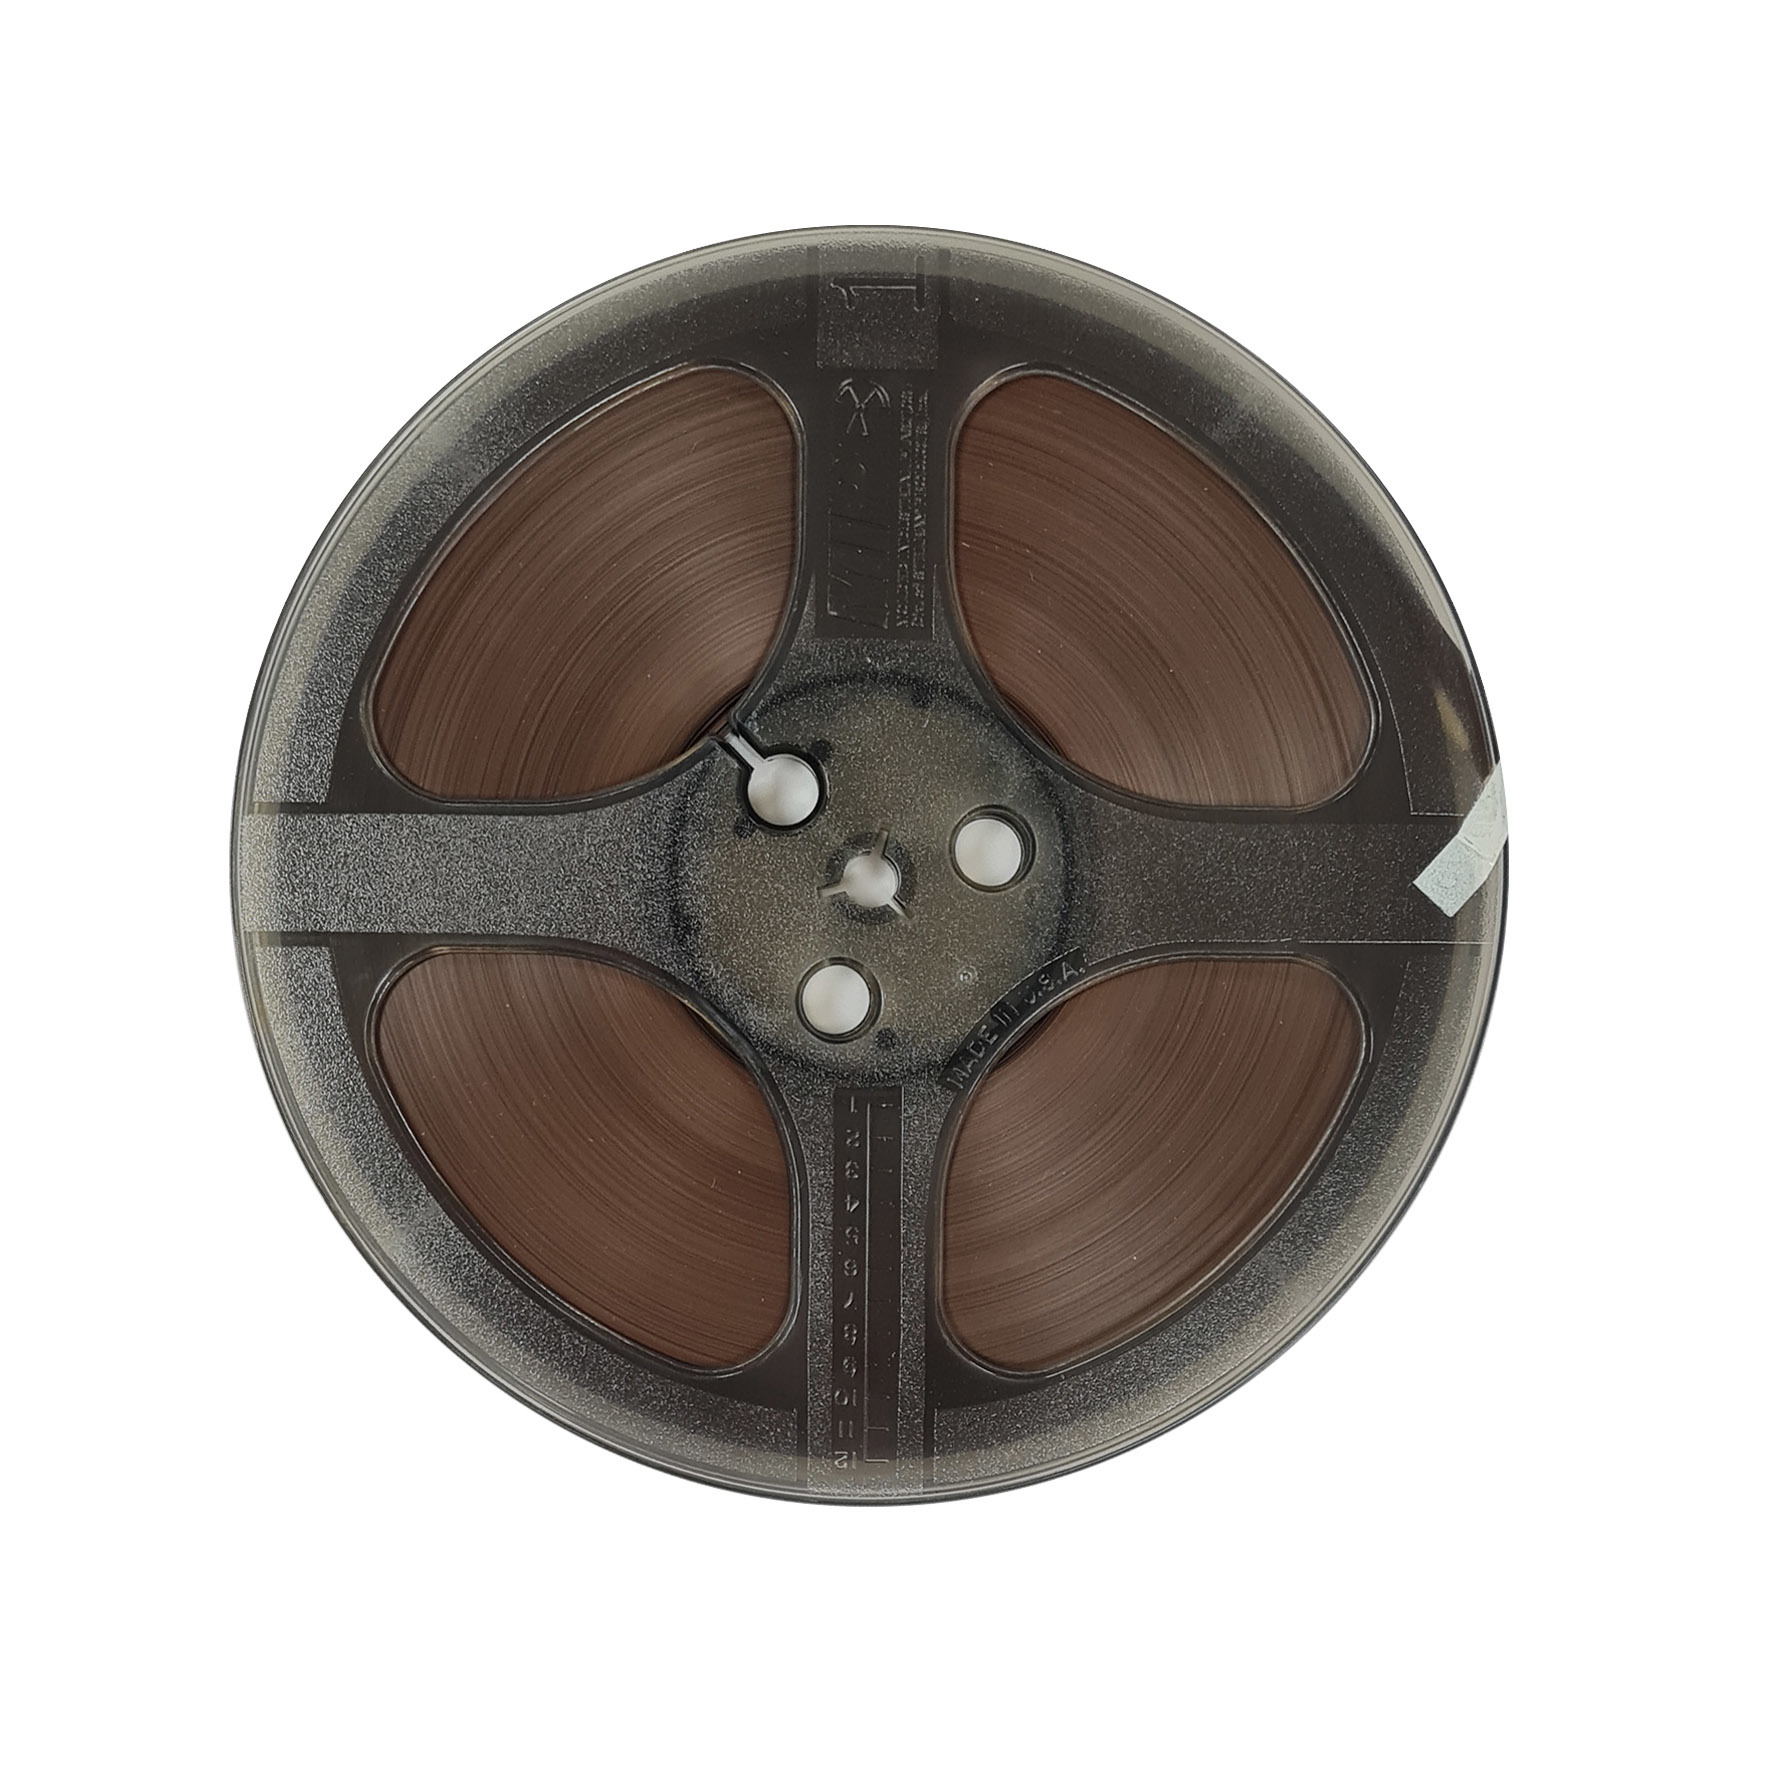 Olympic 1800ft 7 inch spool reel to reel 1/4 audio tape 550m - Retro Style  Media